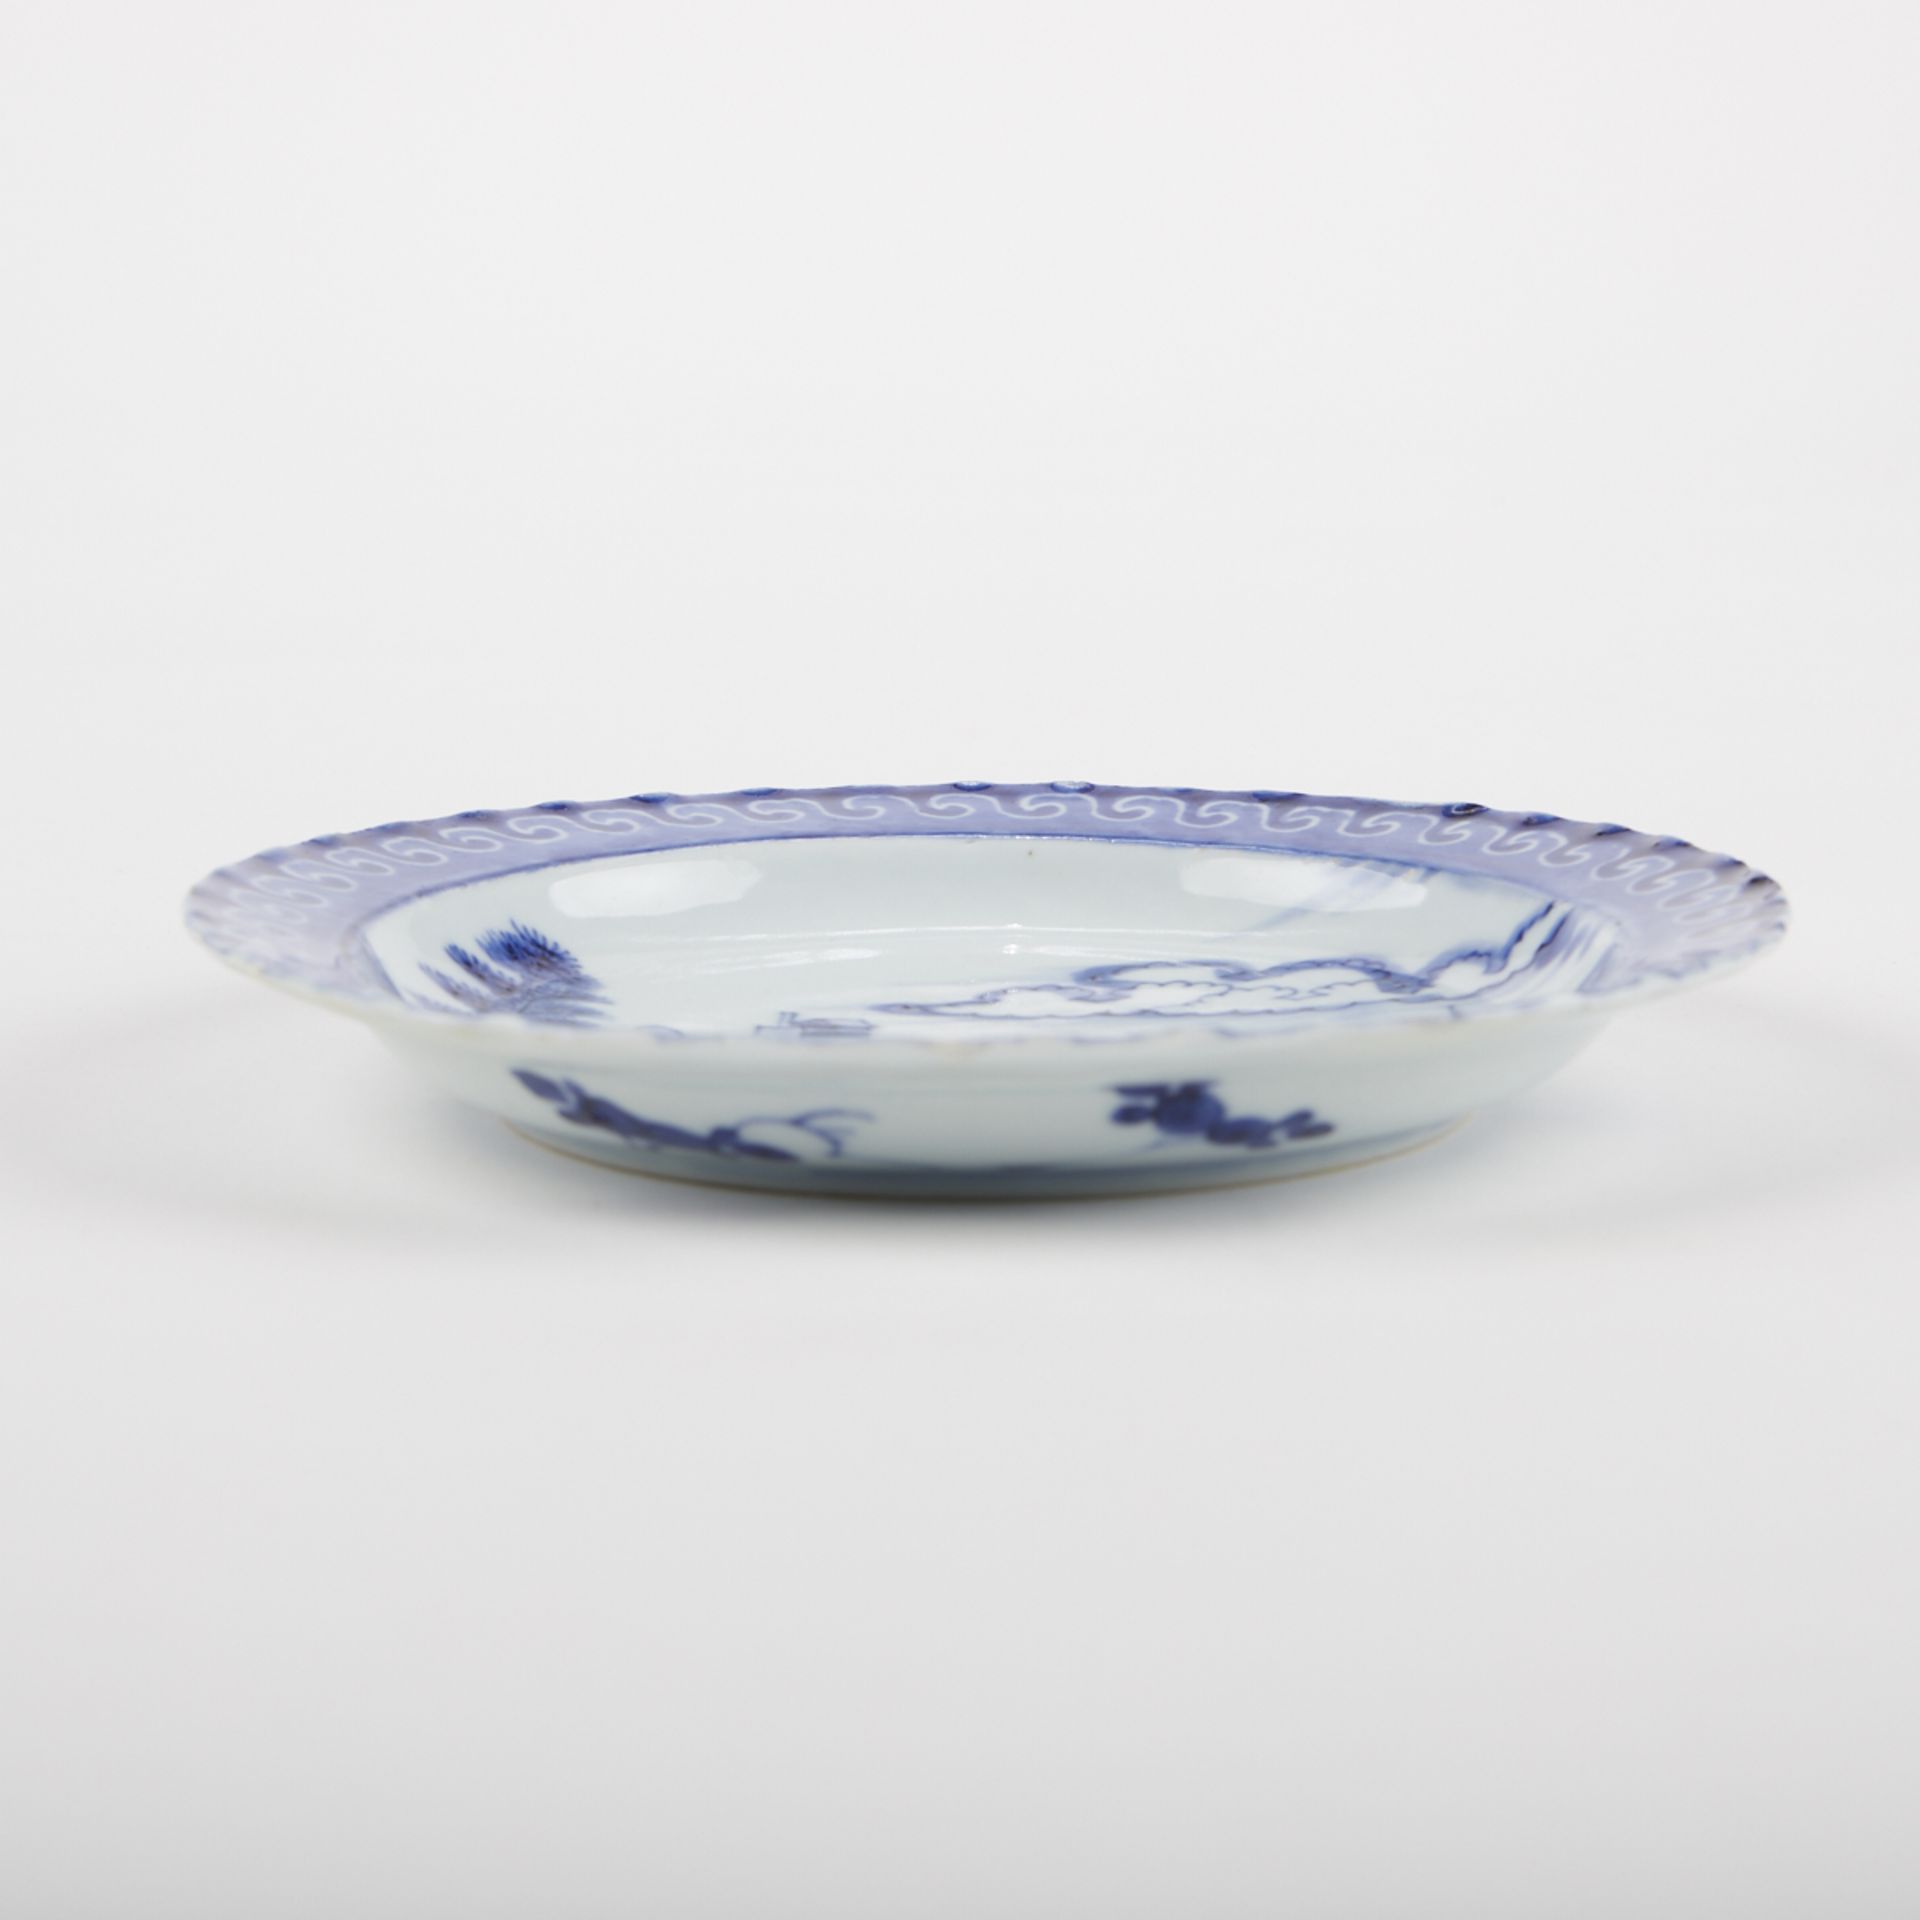 17th c. Blue & White "Deshima Island" Pattern Pottery Plate - Image 4 of 10